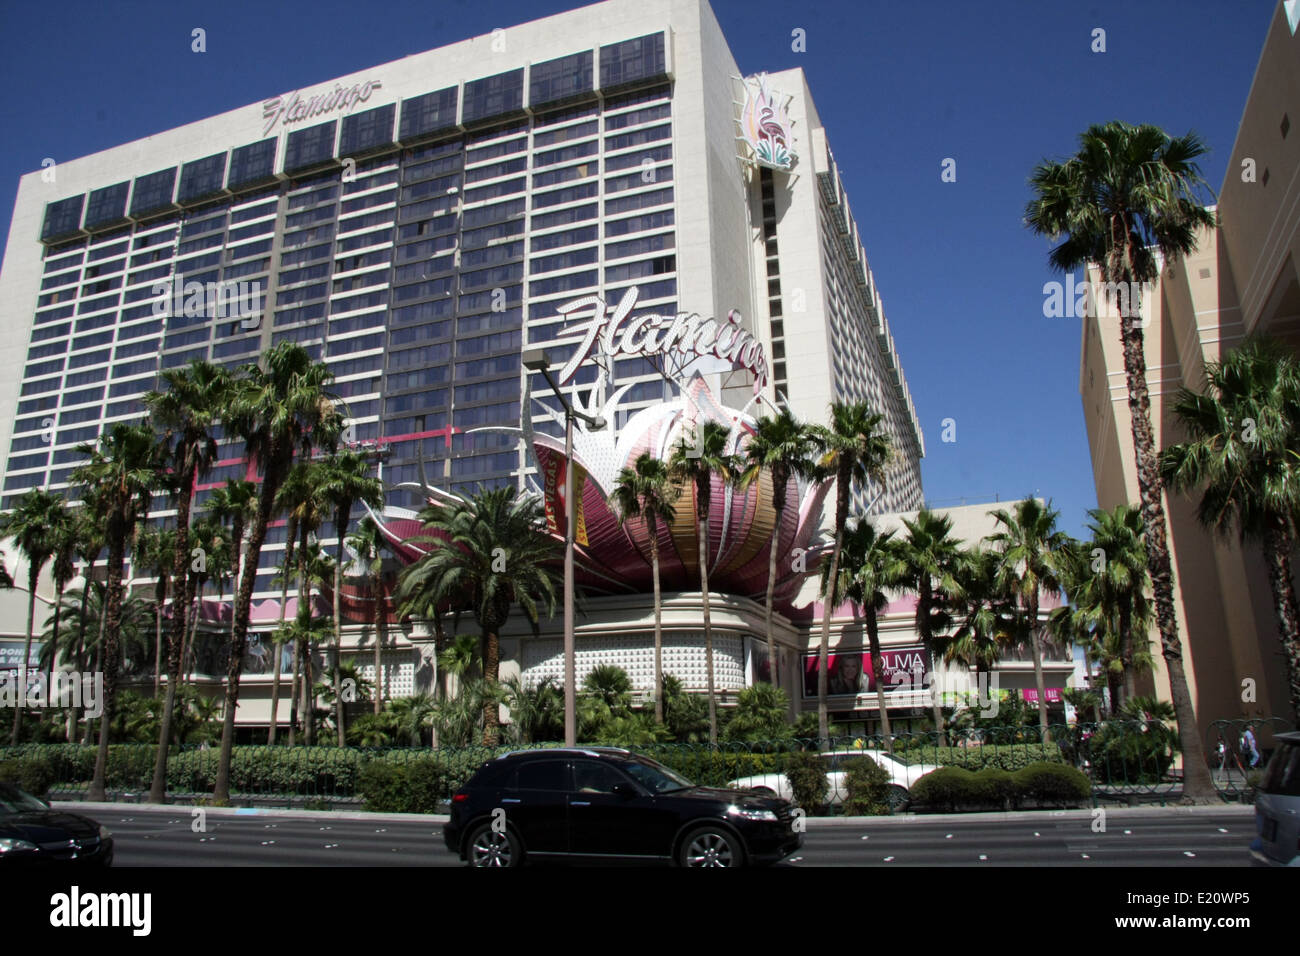 The Flamingo Hotel in Las Vegas Stock Photo